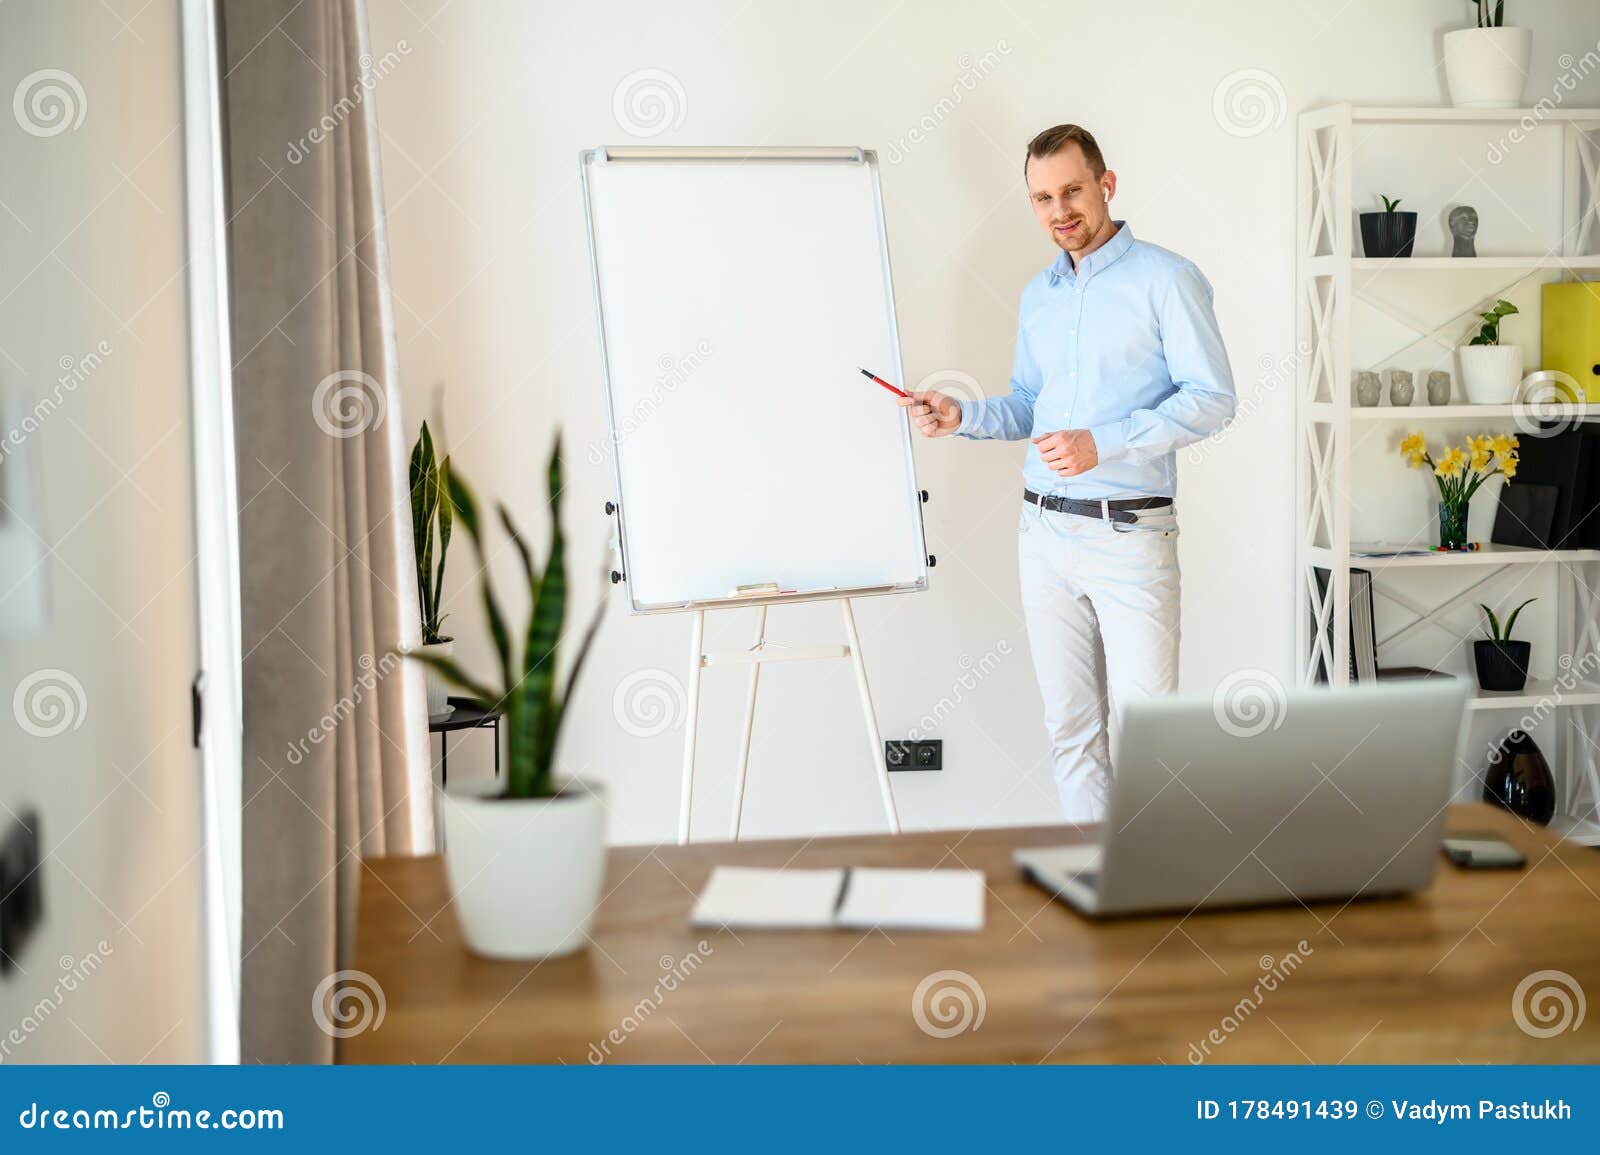 online meeting presentation